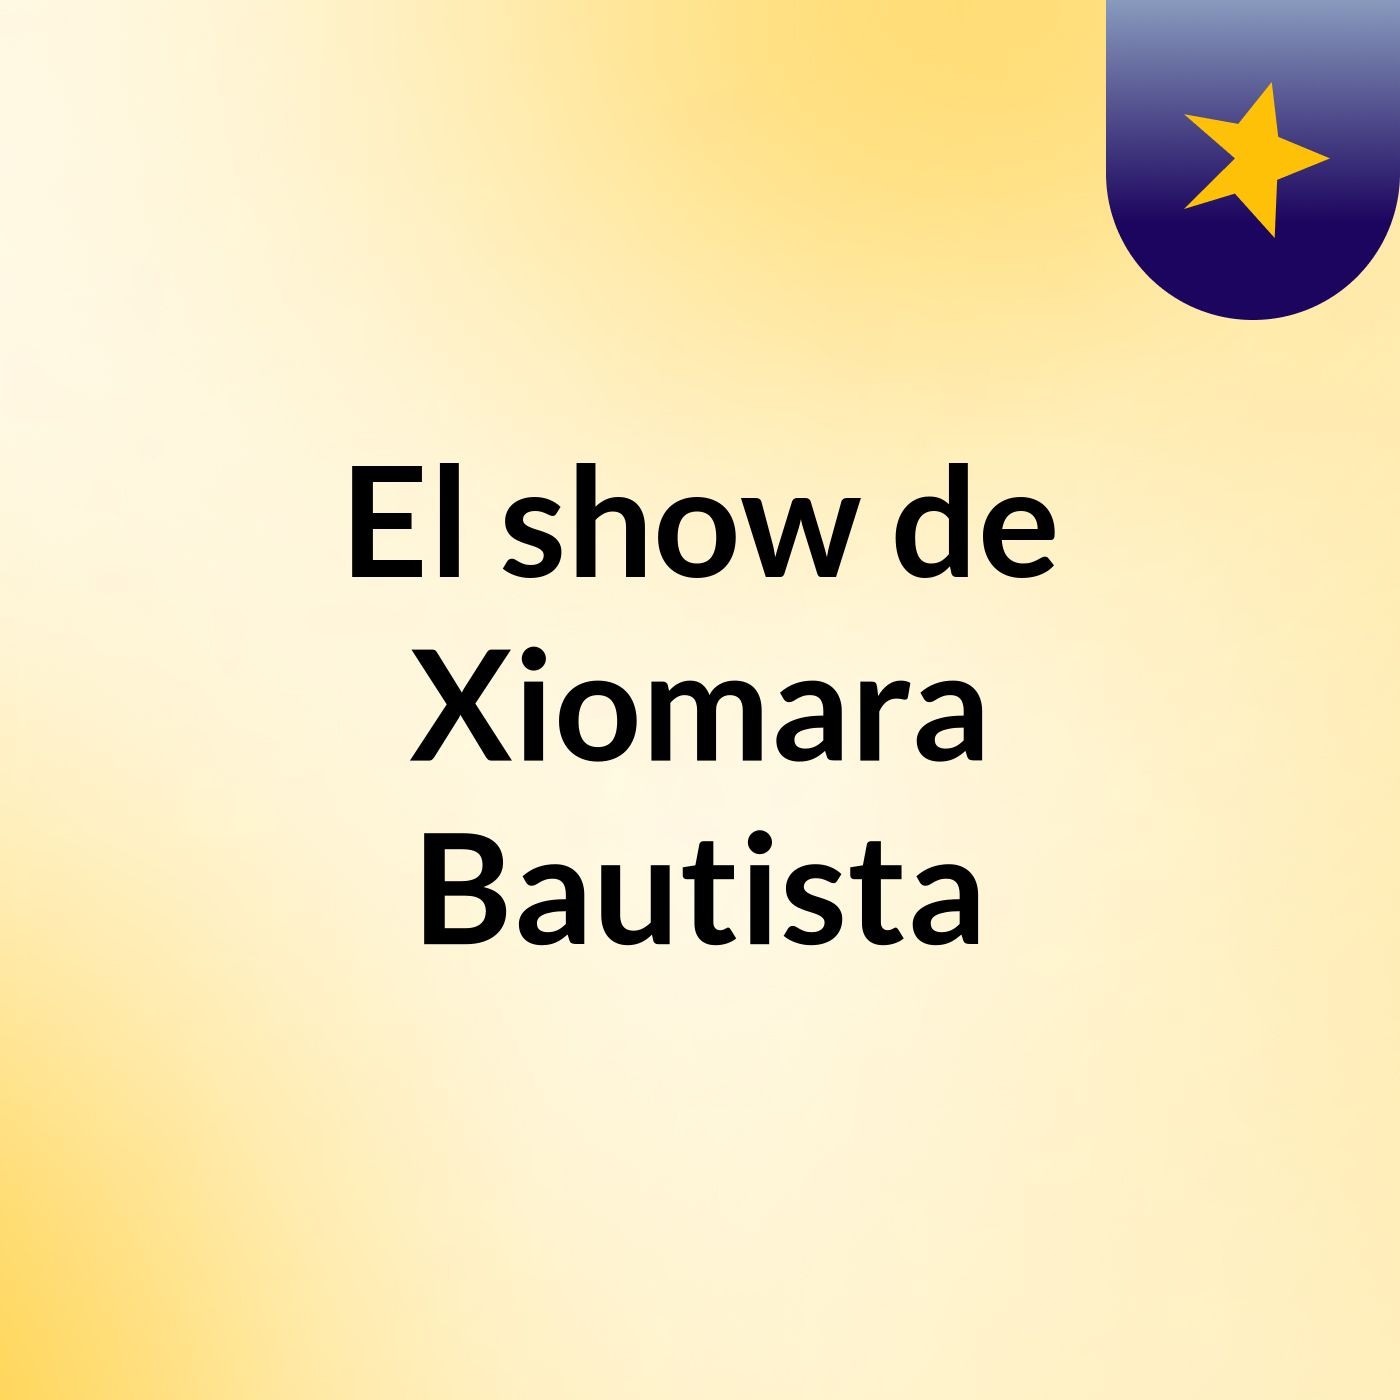 El show de Xiomara Bautista